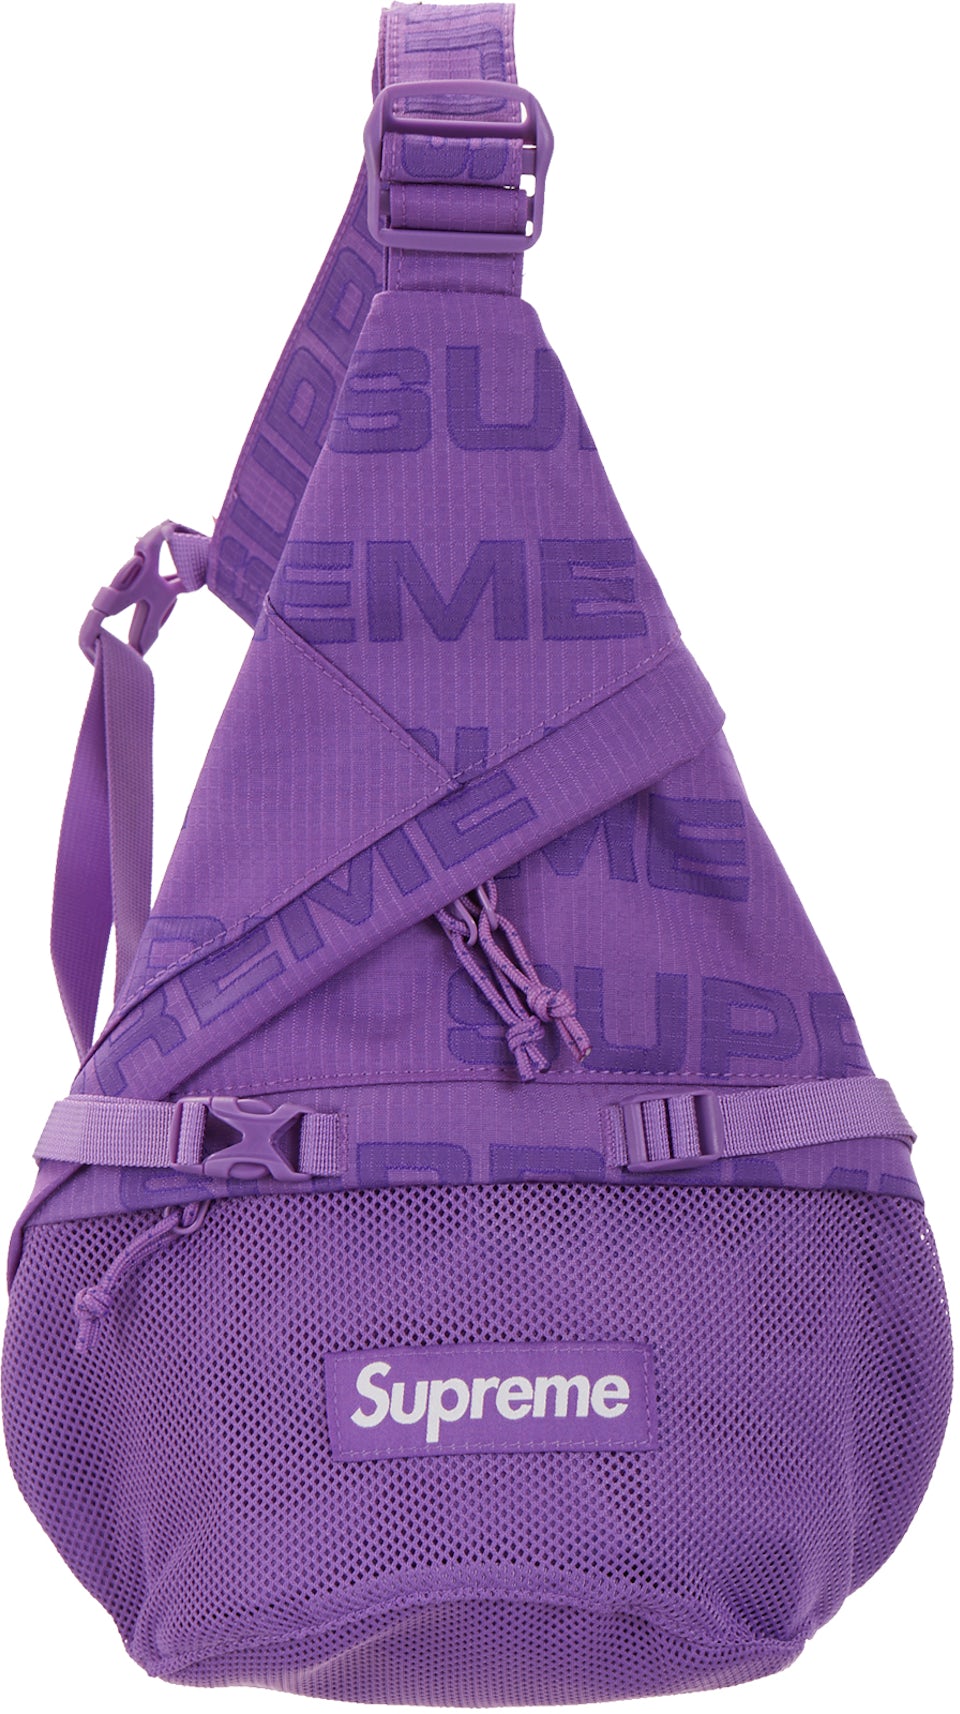 Supreme Duffle Bag FW 21 Purple - Stadium Goods